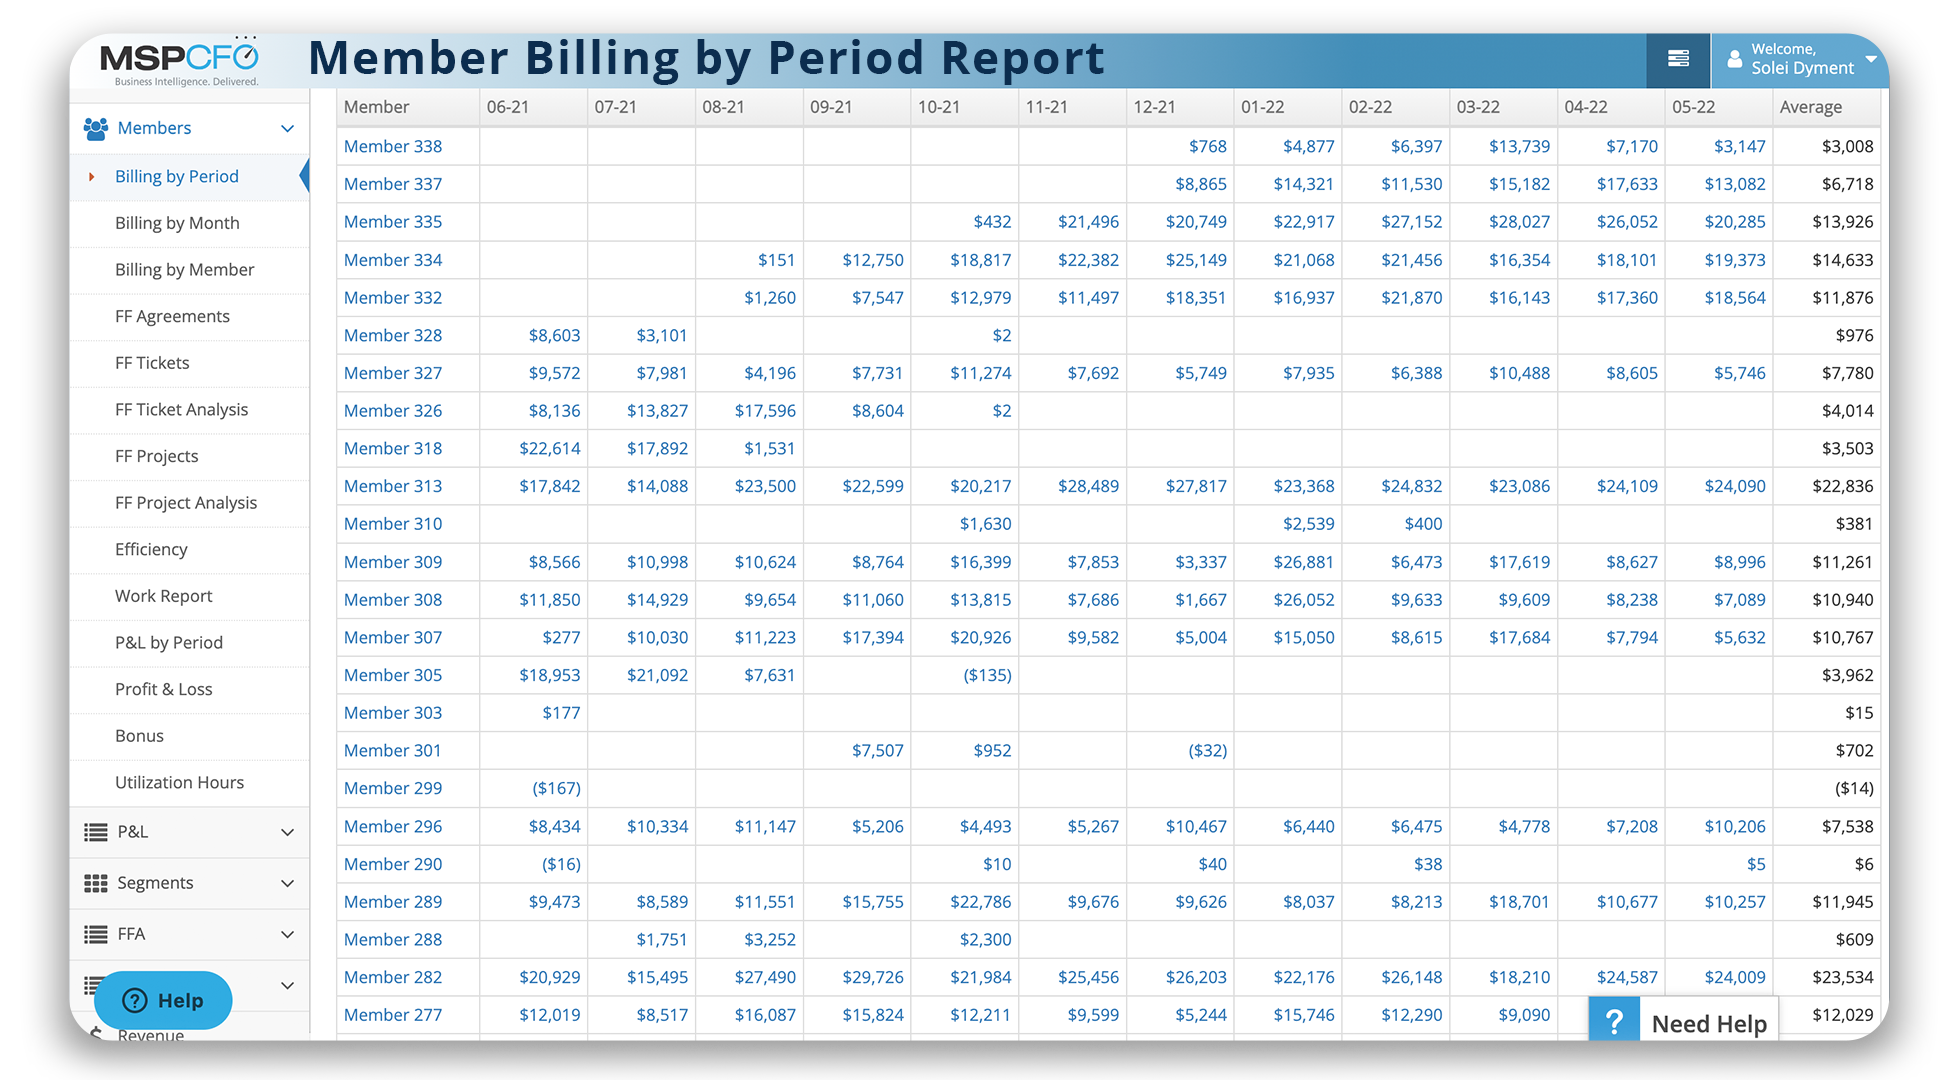 Member Billing by Period Report